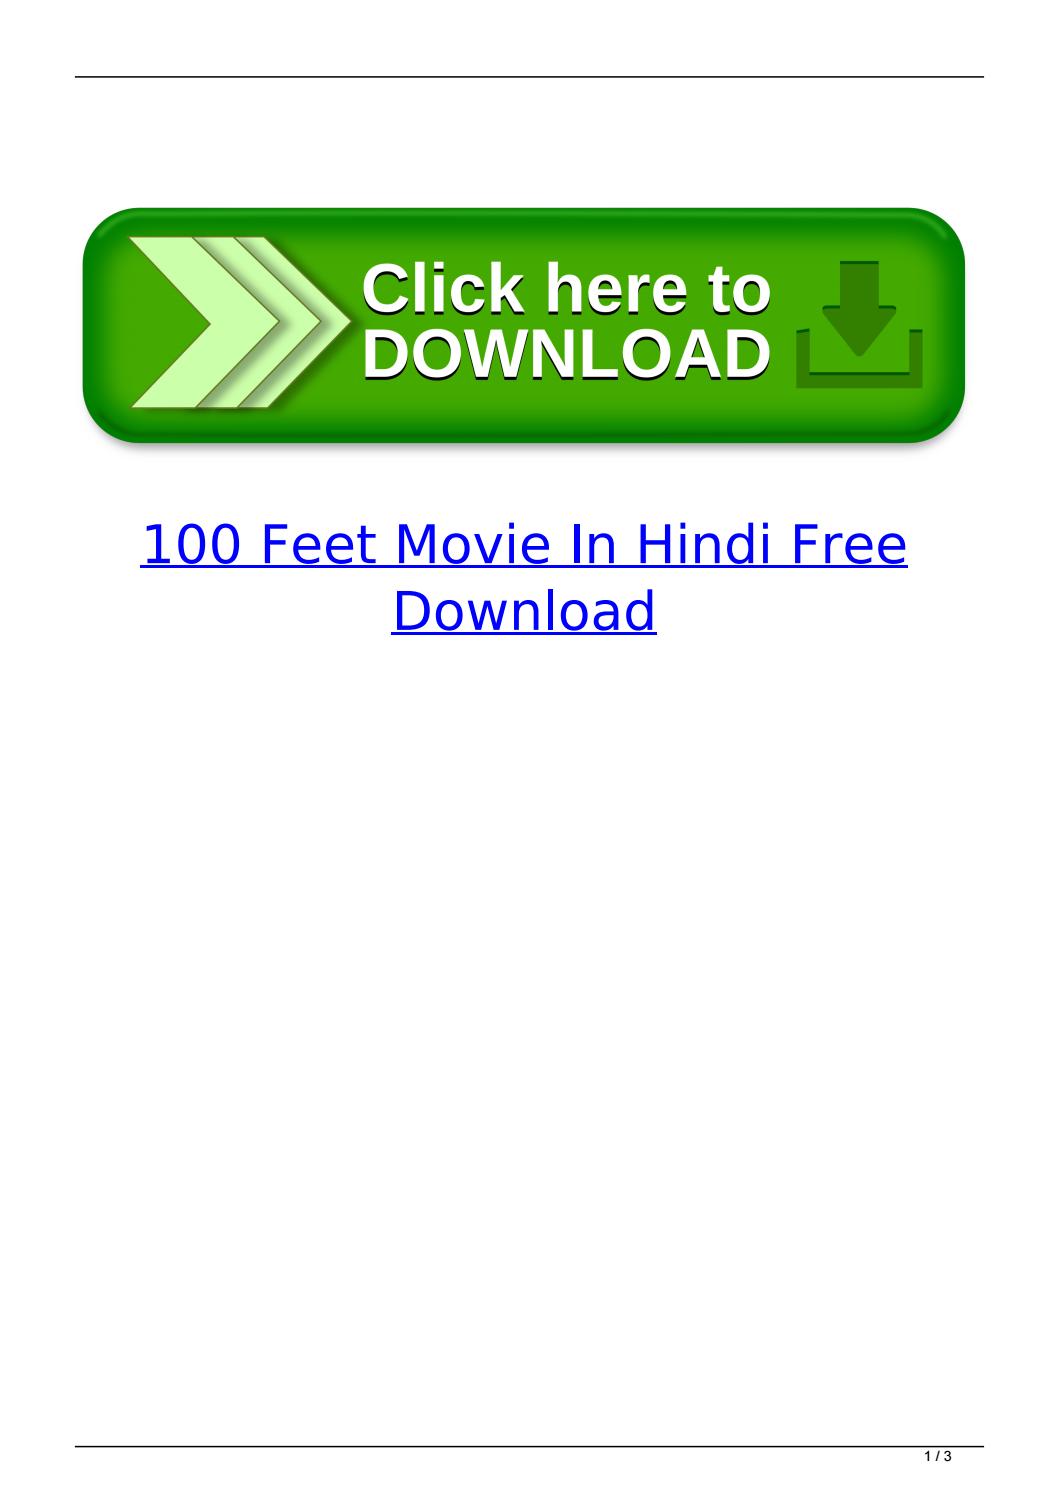 100 feet full movie in hindi free download free